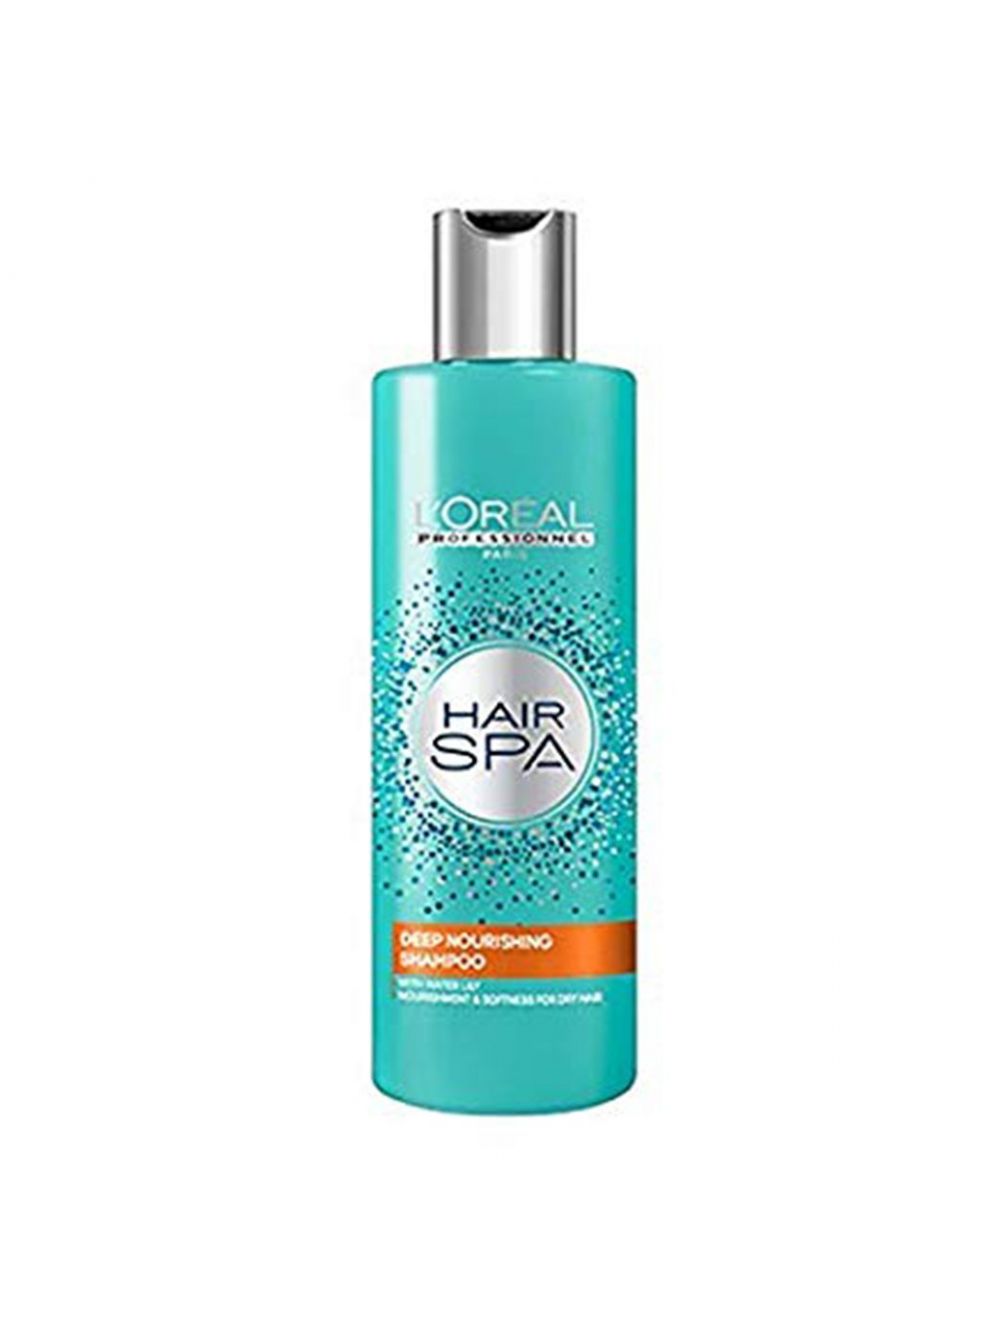 L'Oreal Professionnel Hair Spa Deep Nourishing Shampoo (250ml)